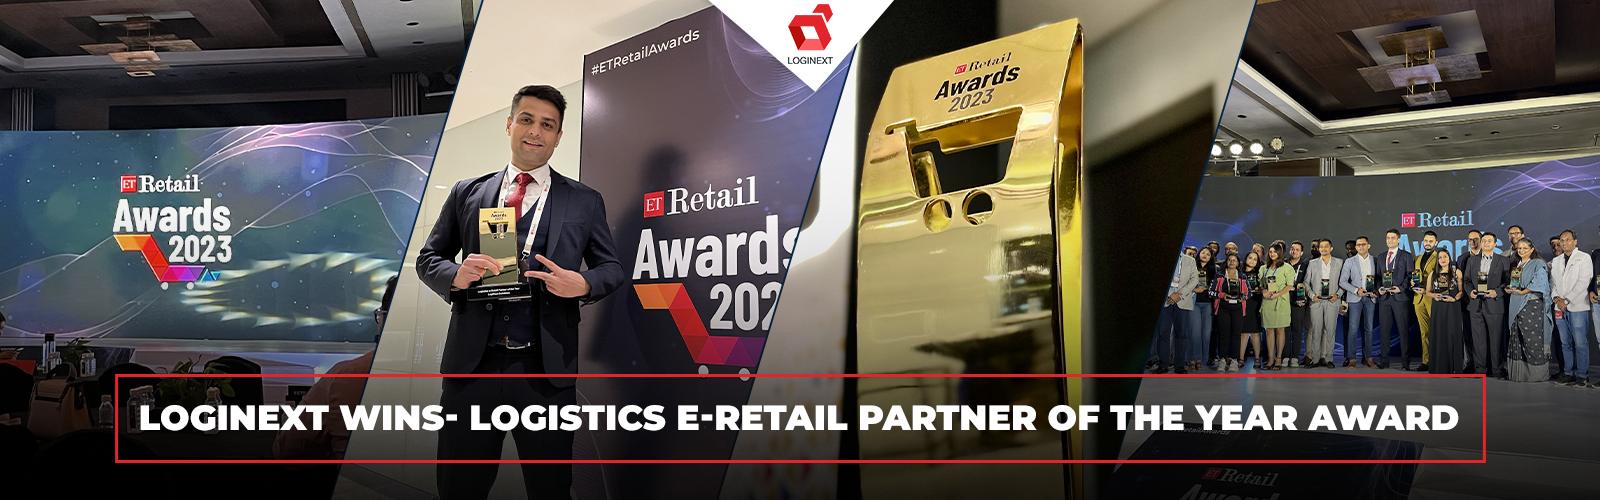 LogiNext Wins ET Retail- Logistics e-Retail Partner of the Year Award!